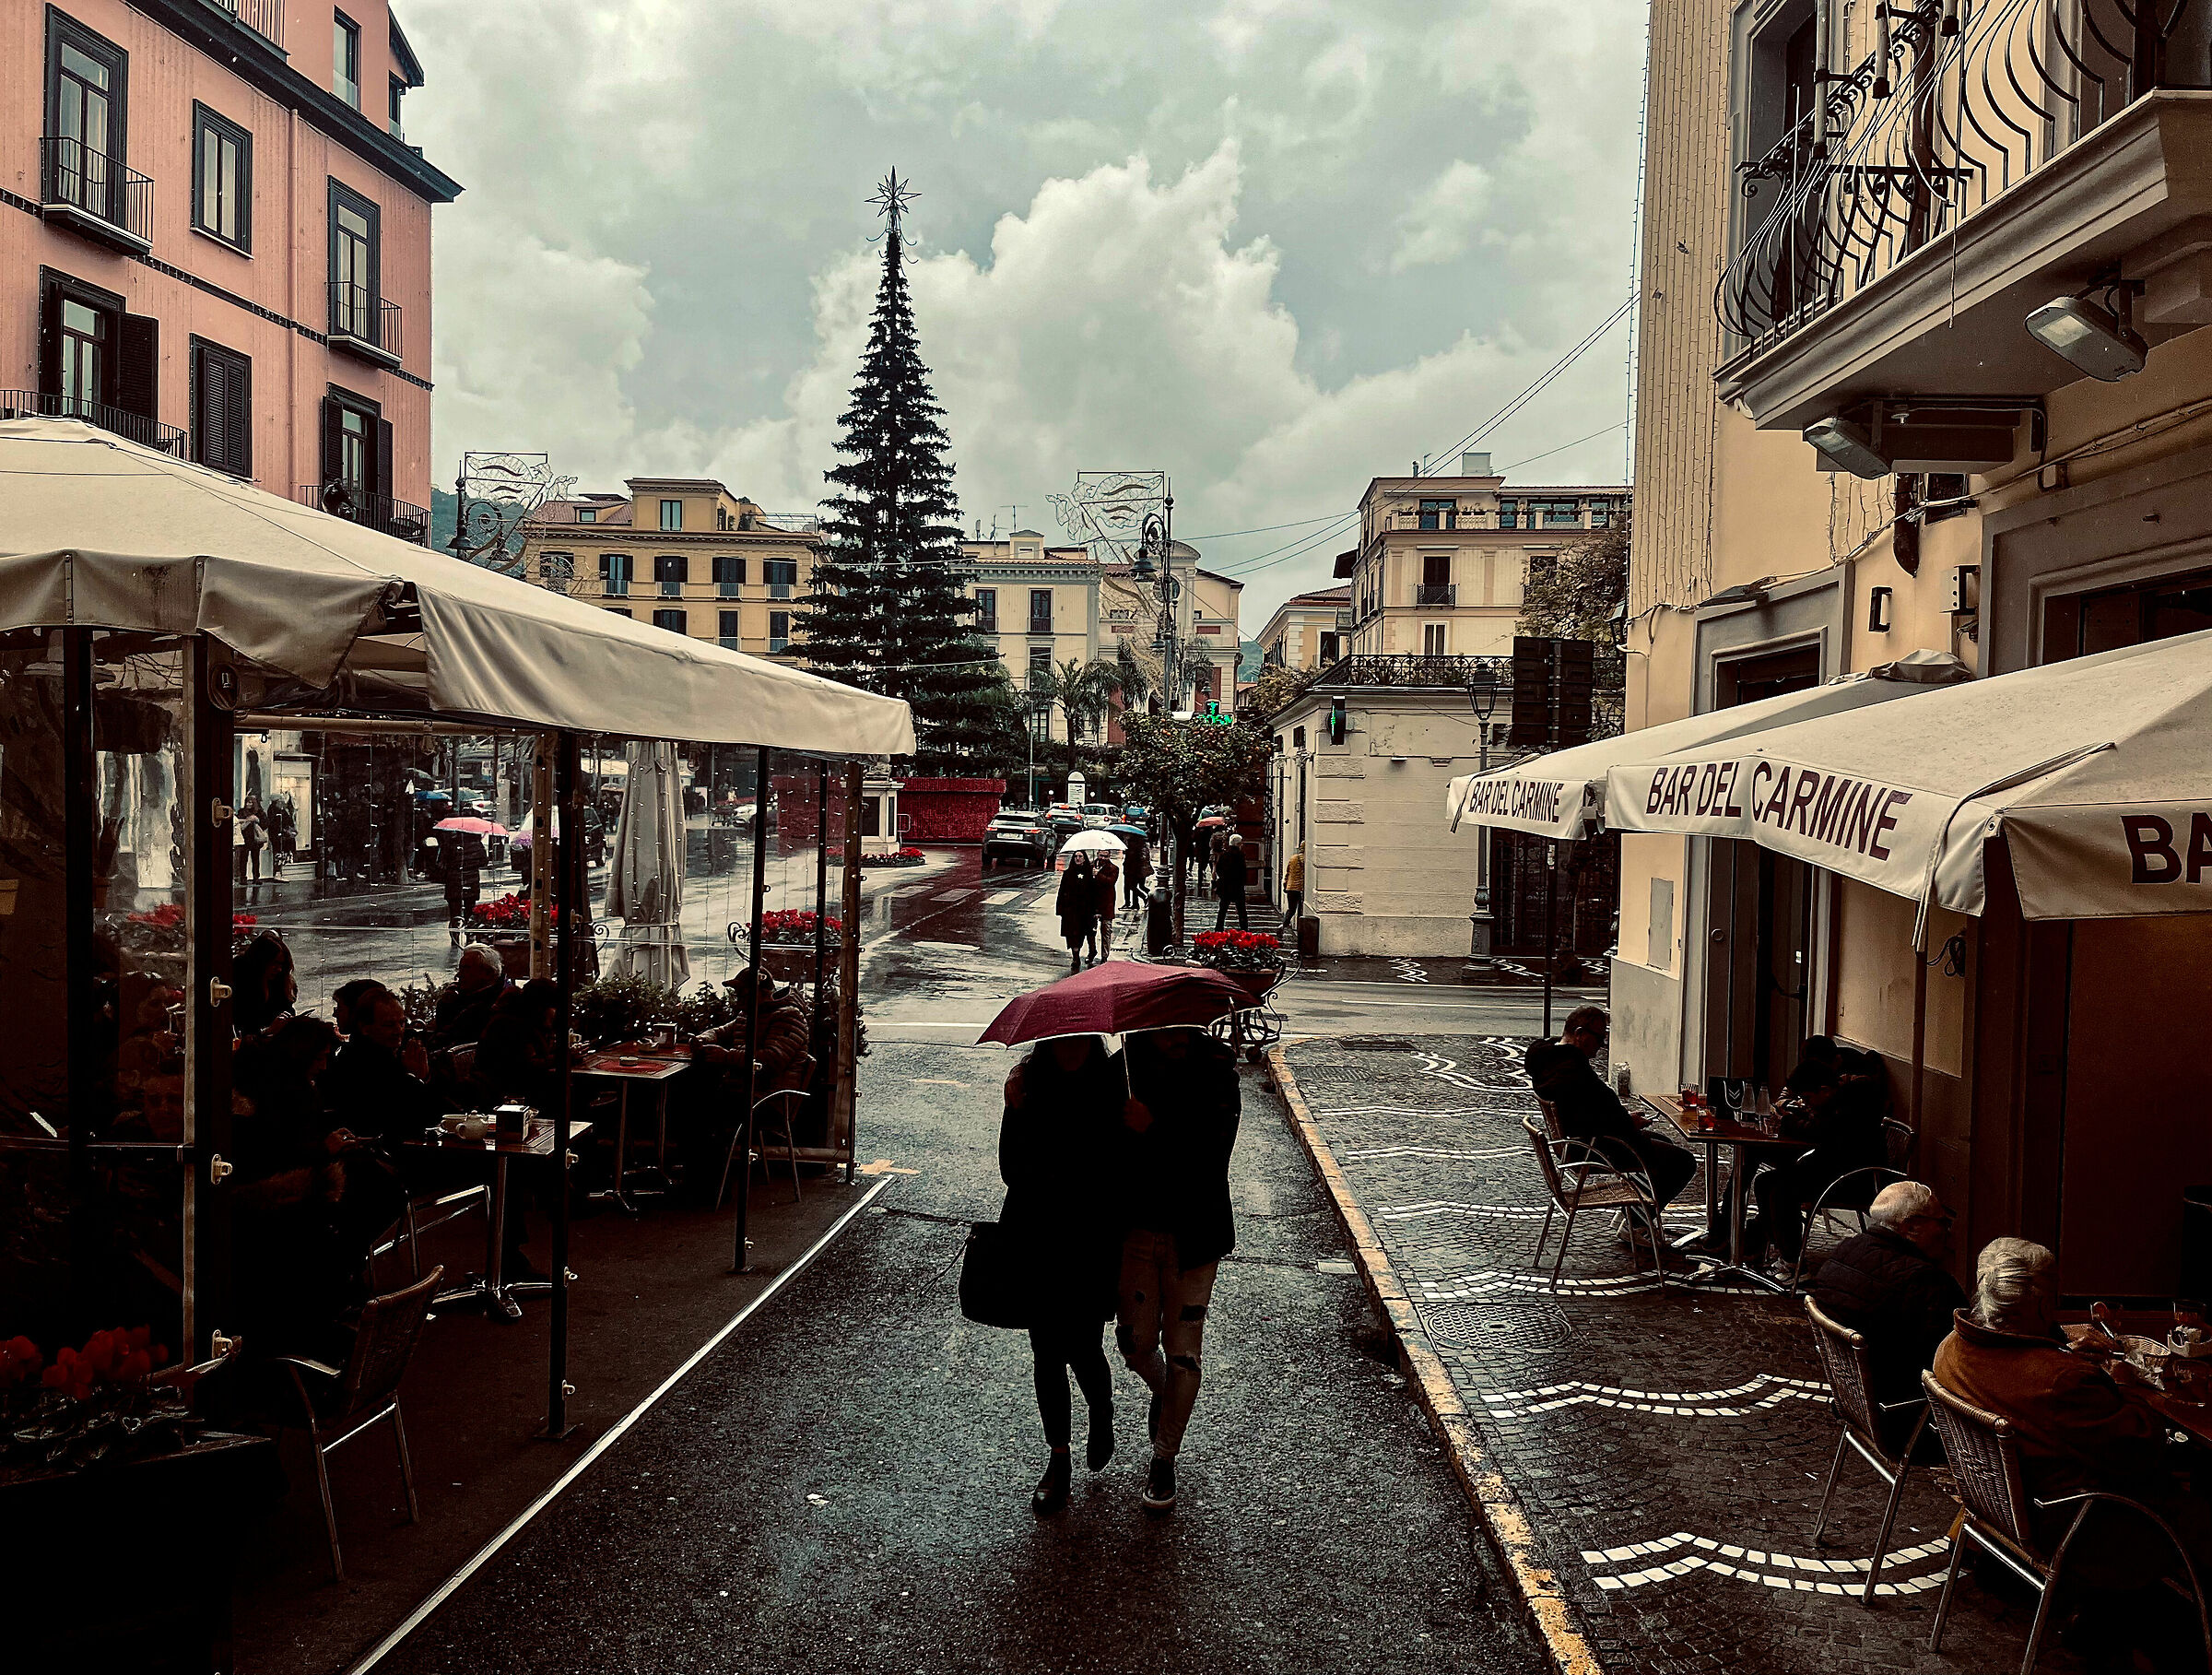 A rainy day in Sorrento...